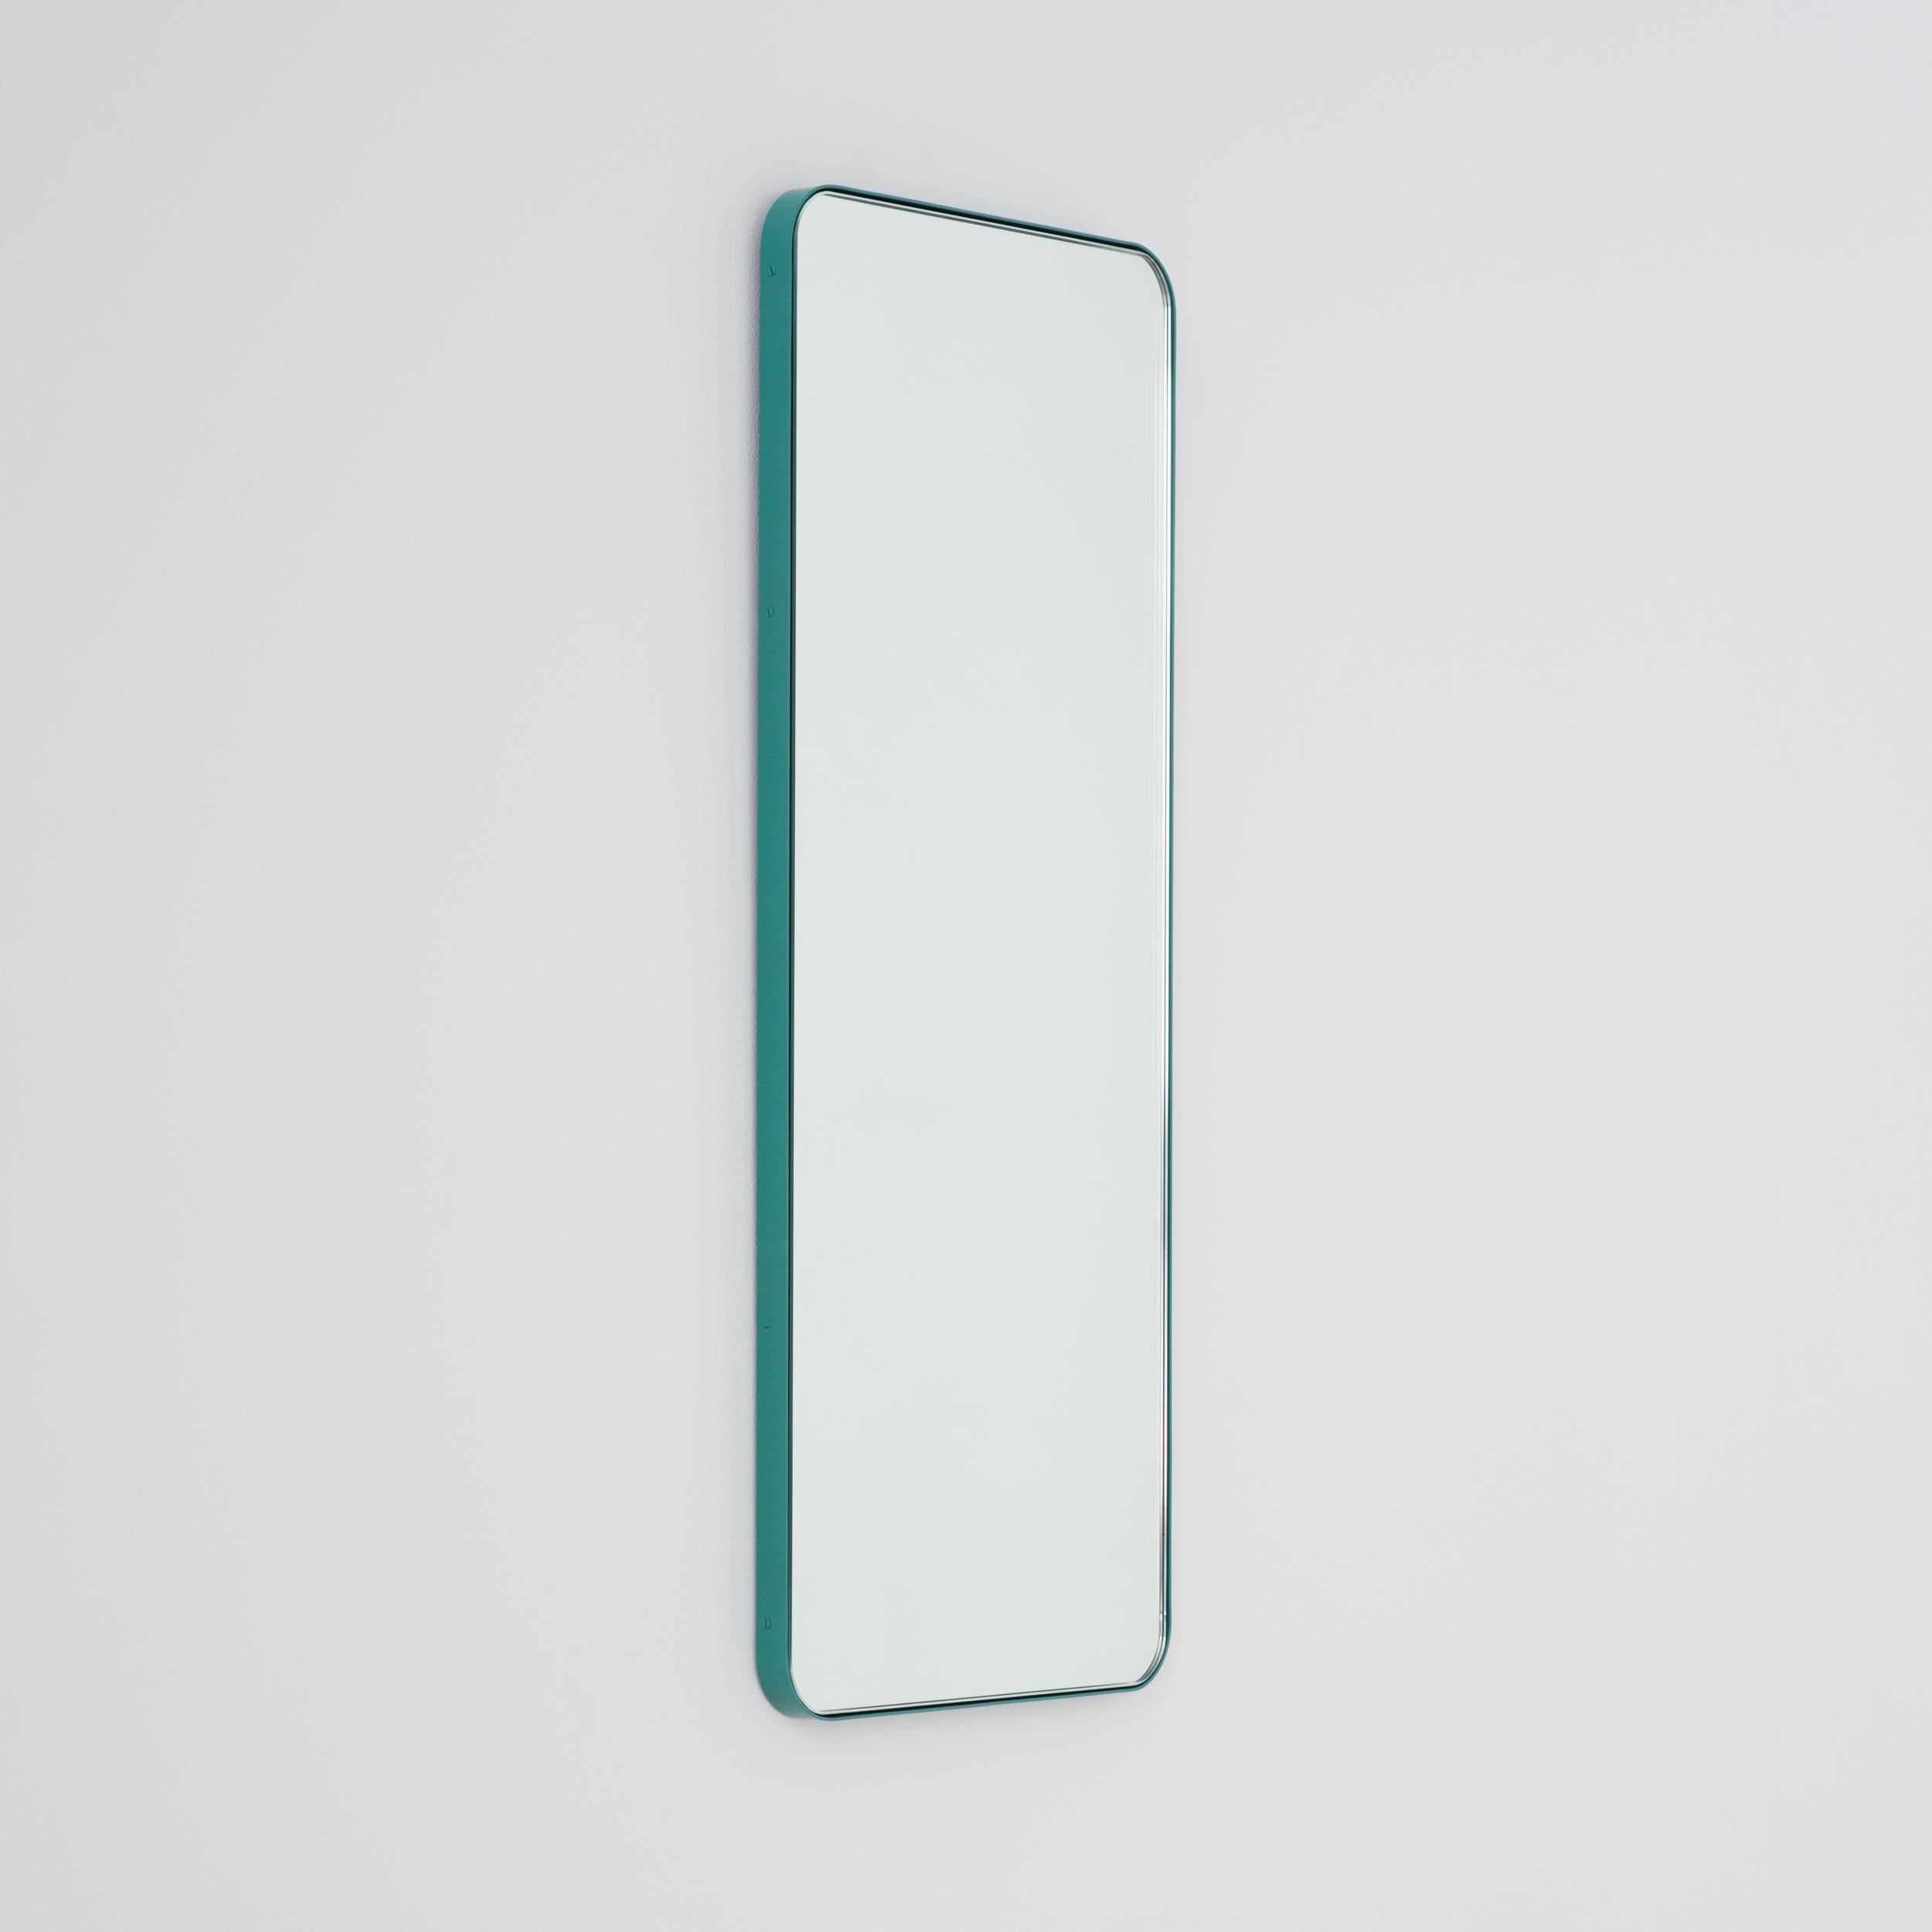 Organic Modern Quadris Rectangular Modern Mirror with Mint Turquoise Frame, XL For Sale